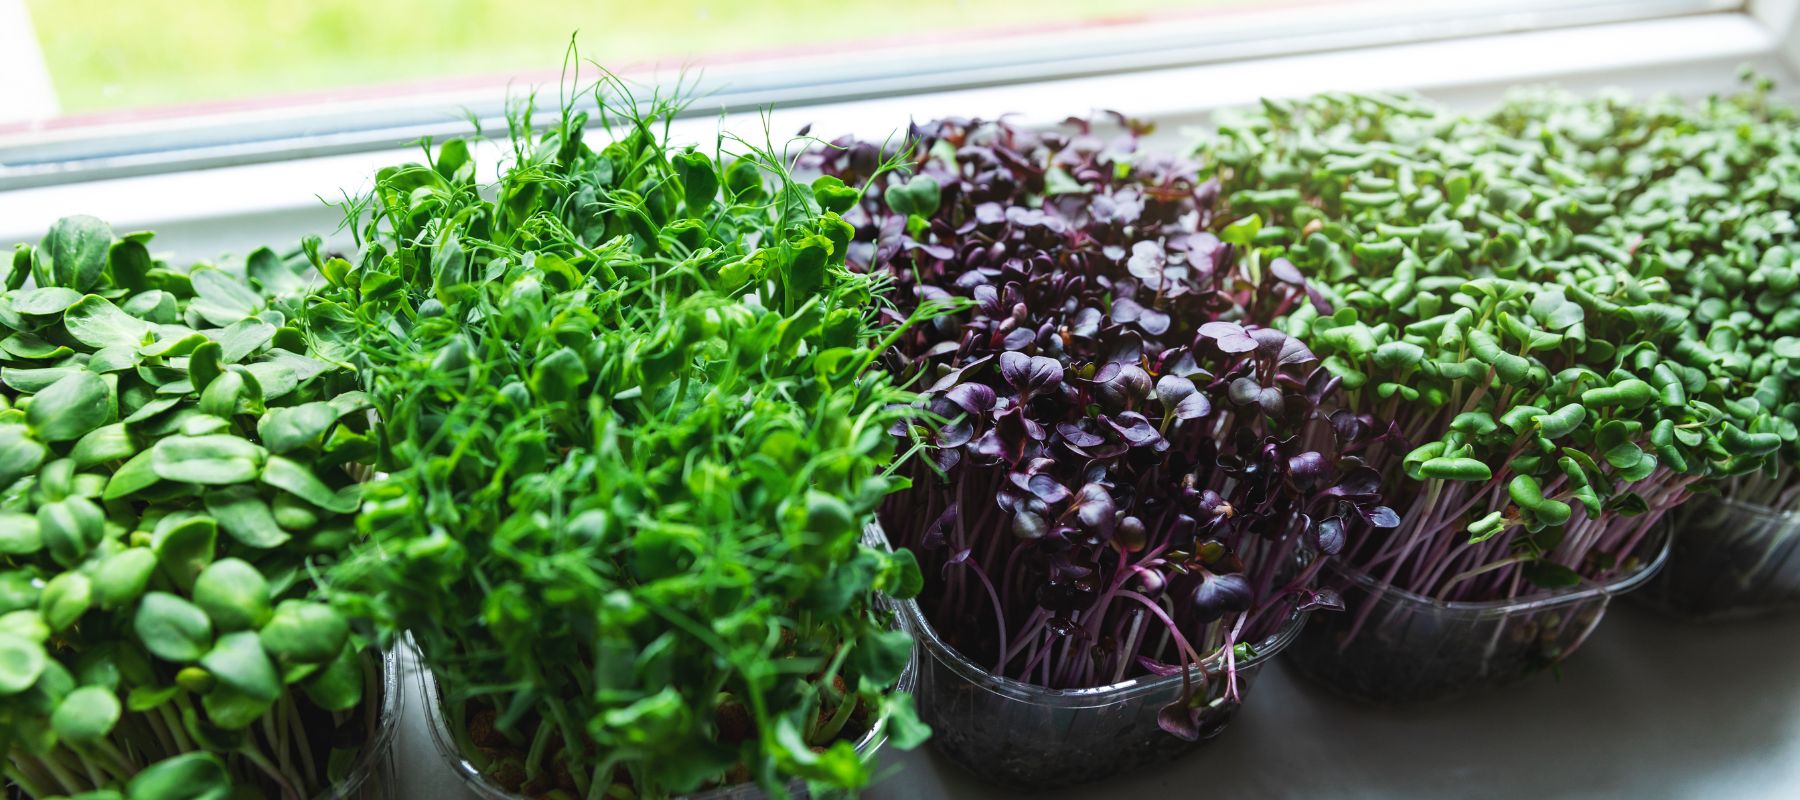 5 Tips for Growing Microgreens